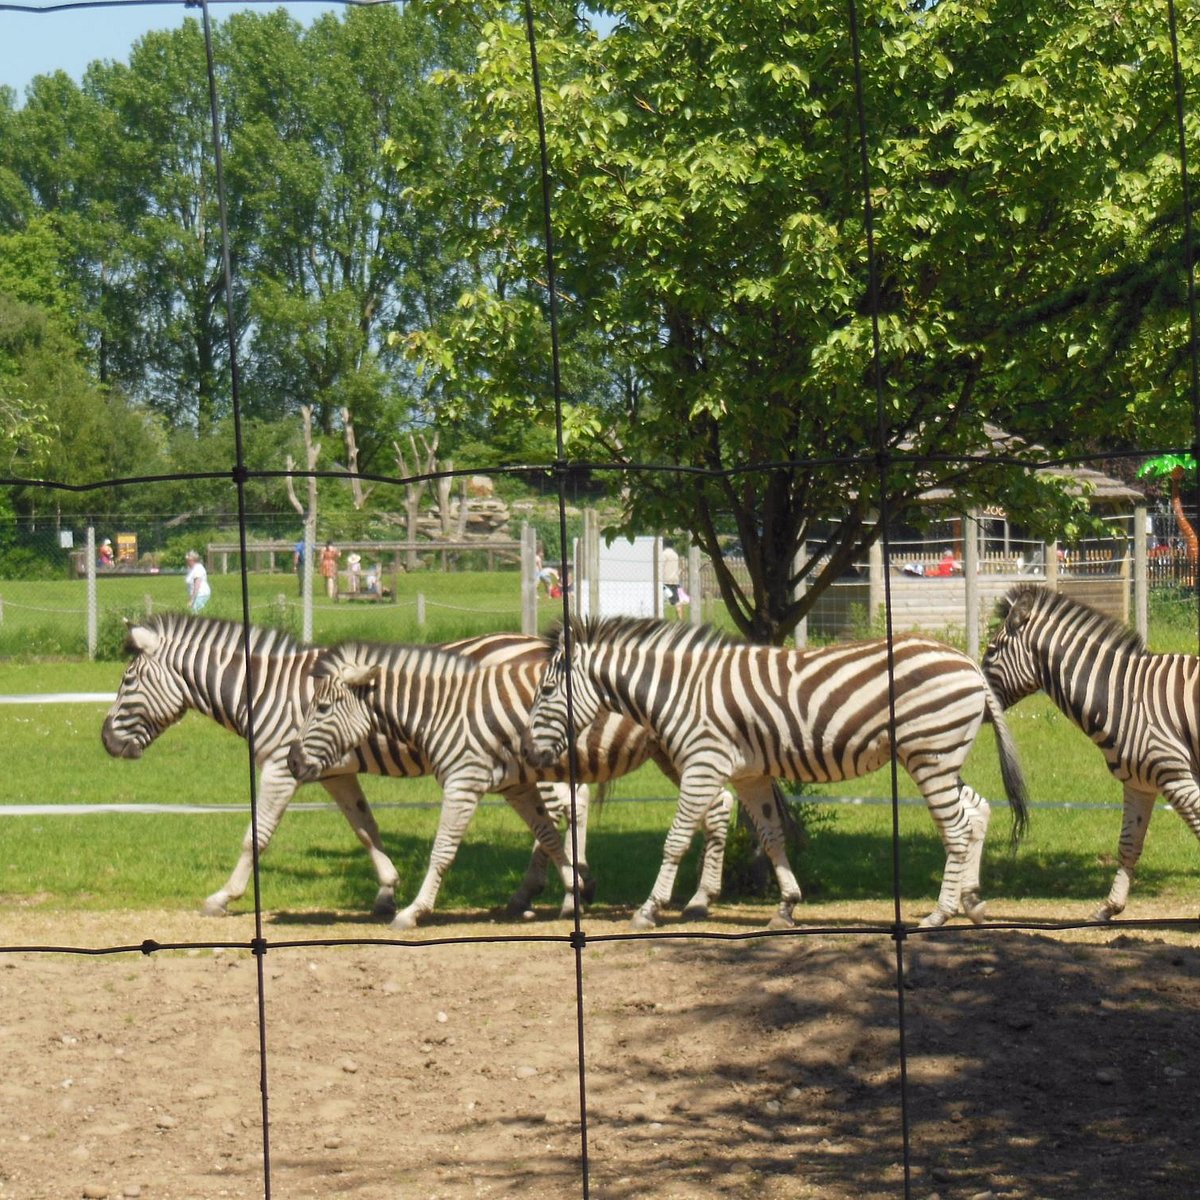 twycross zoo or safari park